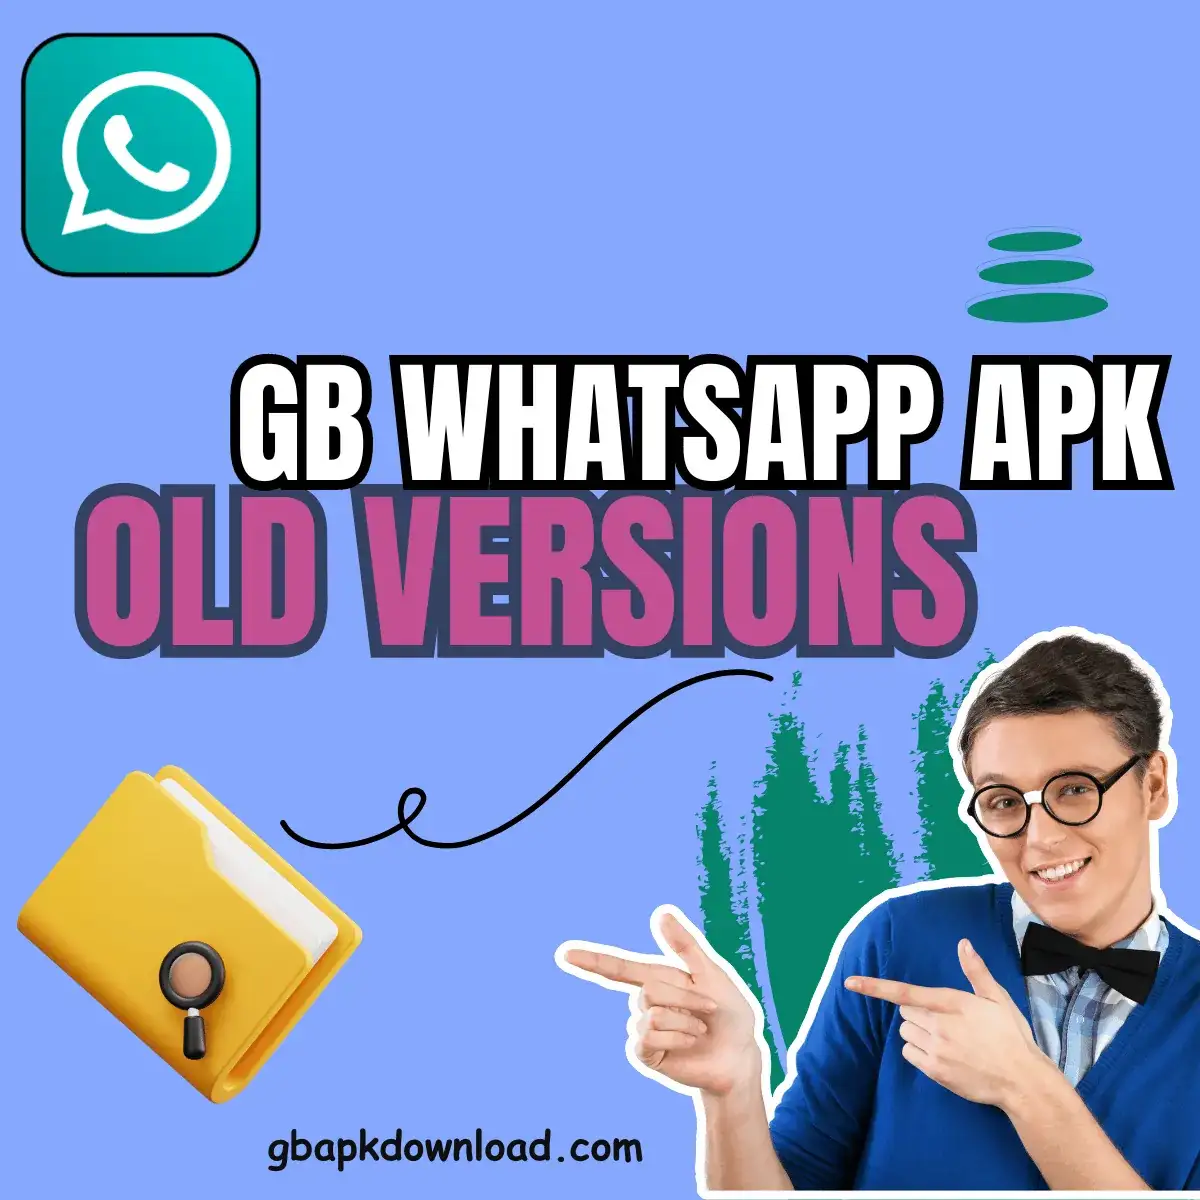 GB WhatsApp Old Versions 